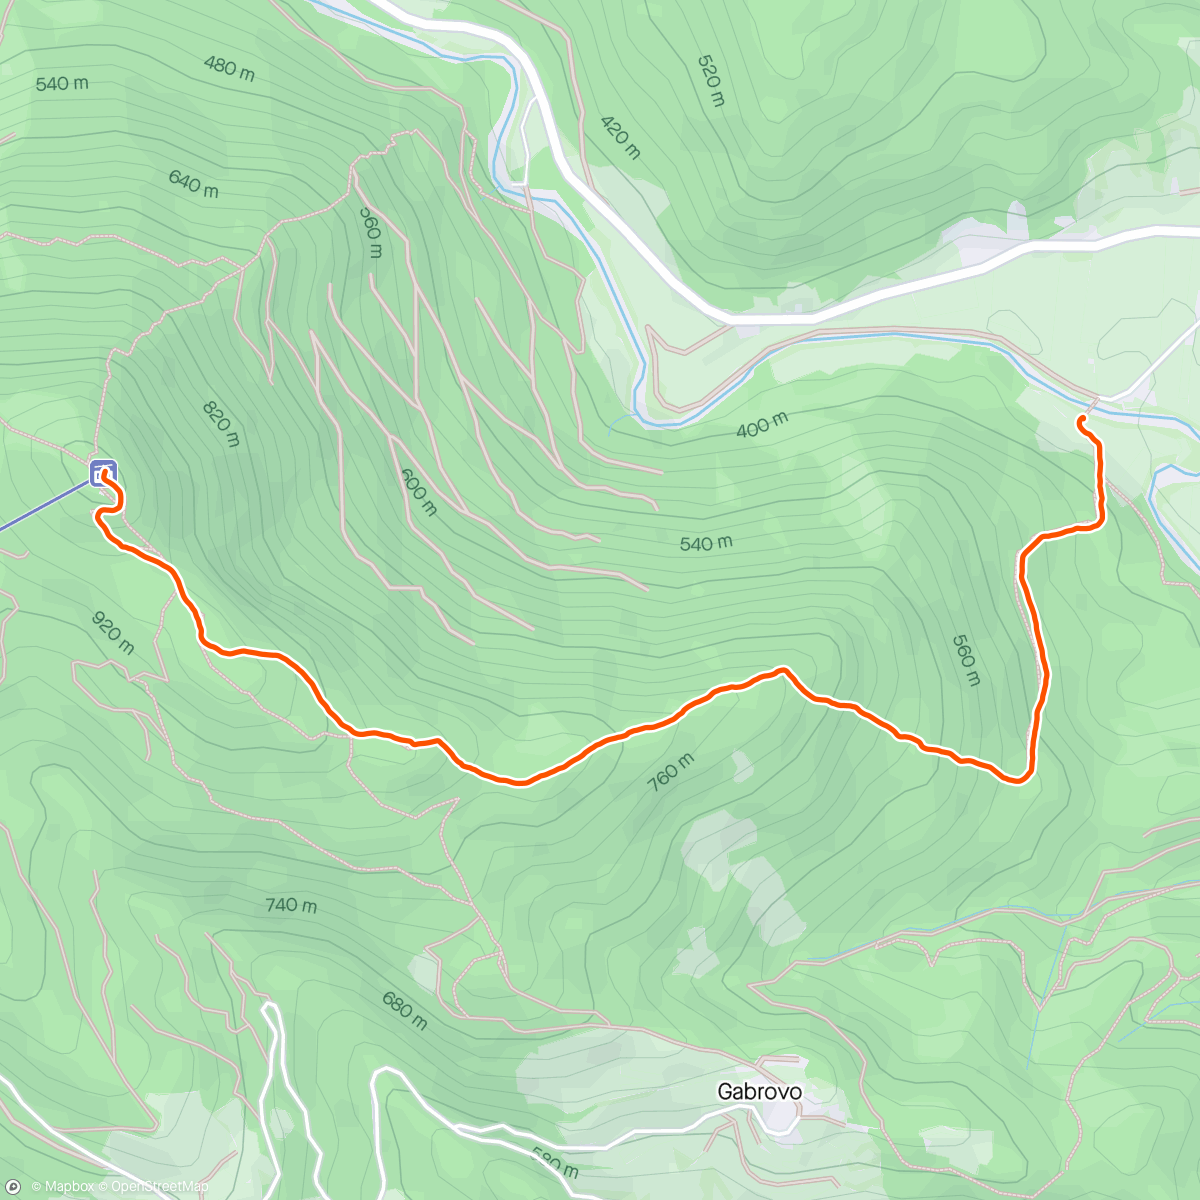 Map of the activity, Skor tek na Lubnik po grebenu